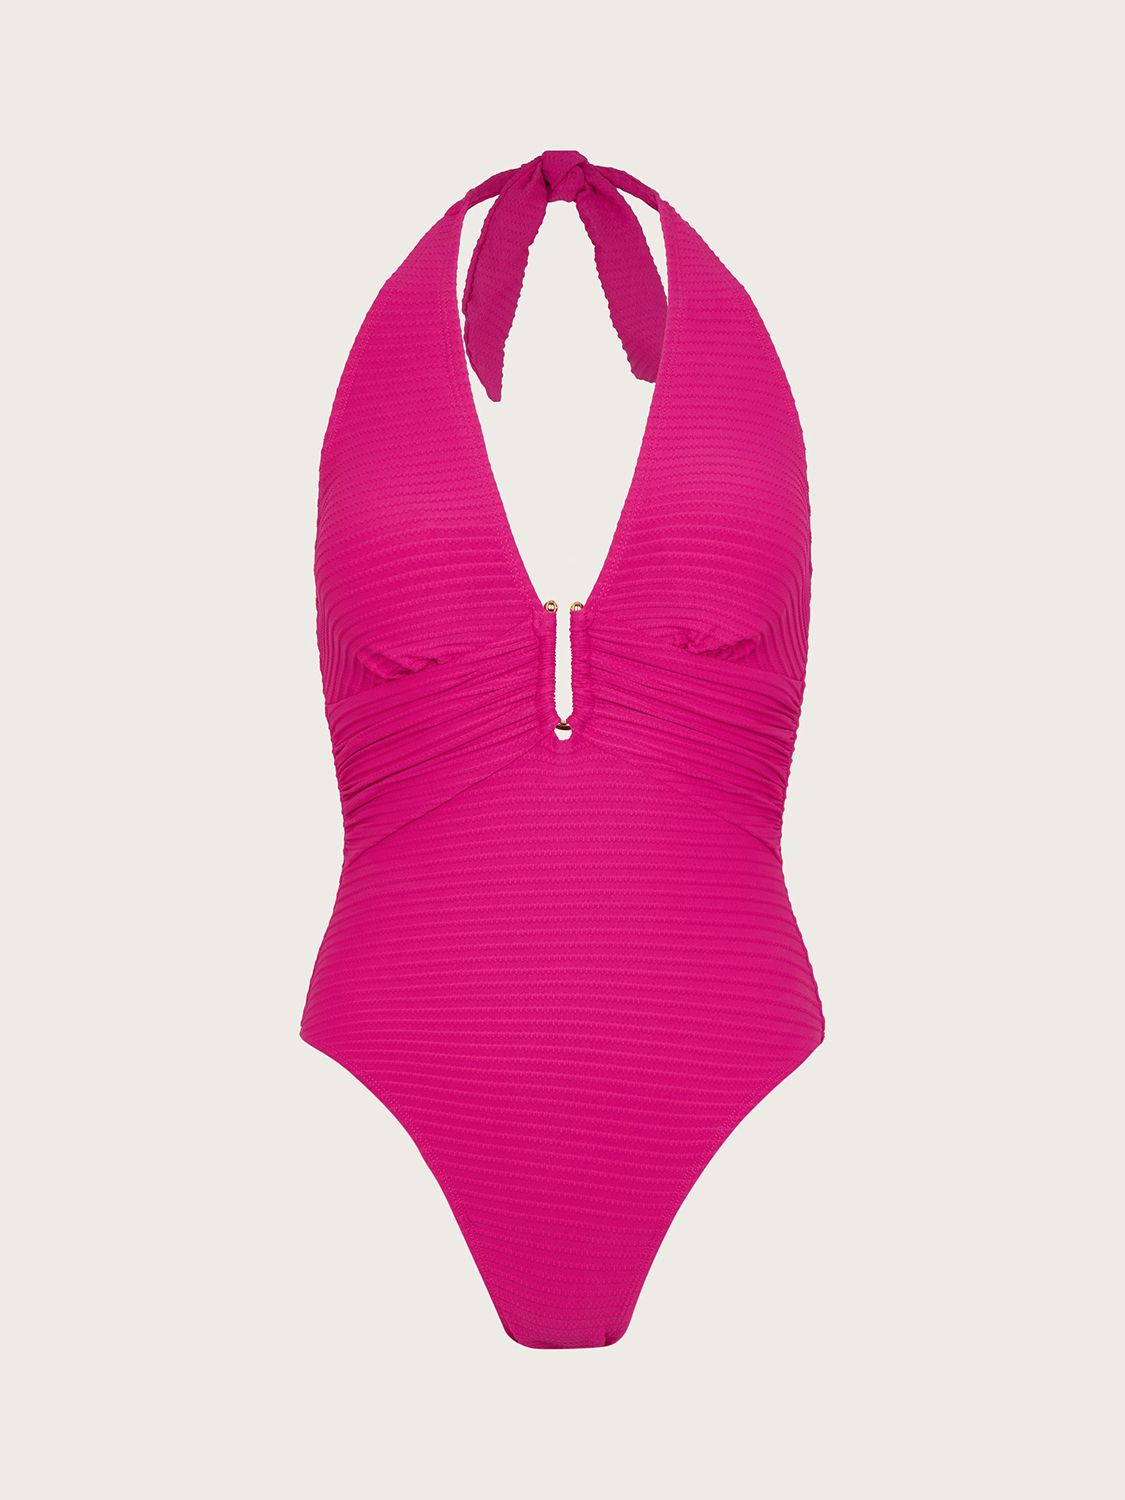 Monsoon Maria Halter Neck Swimsuit, Pink, 8